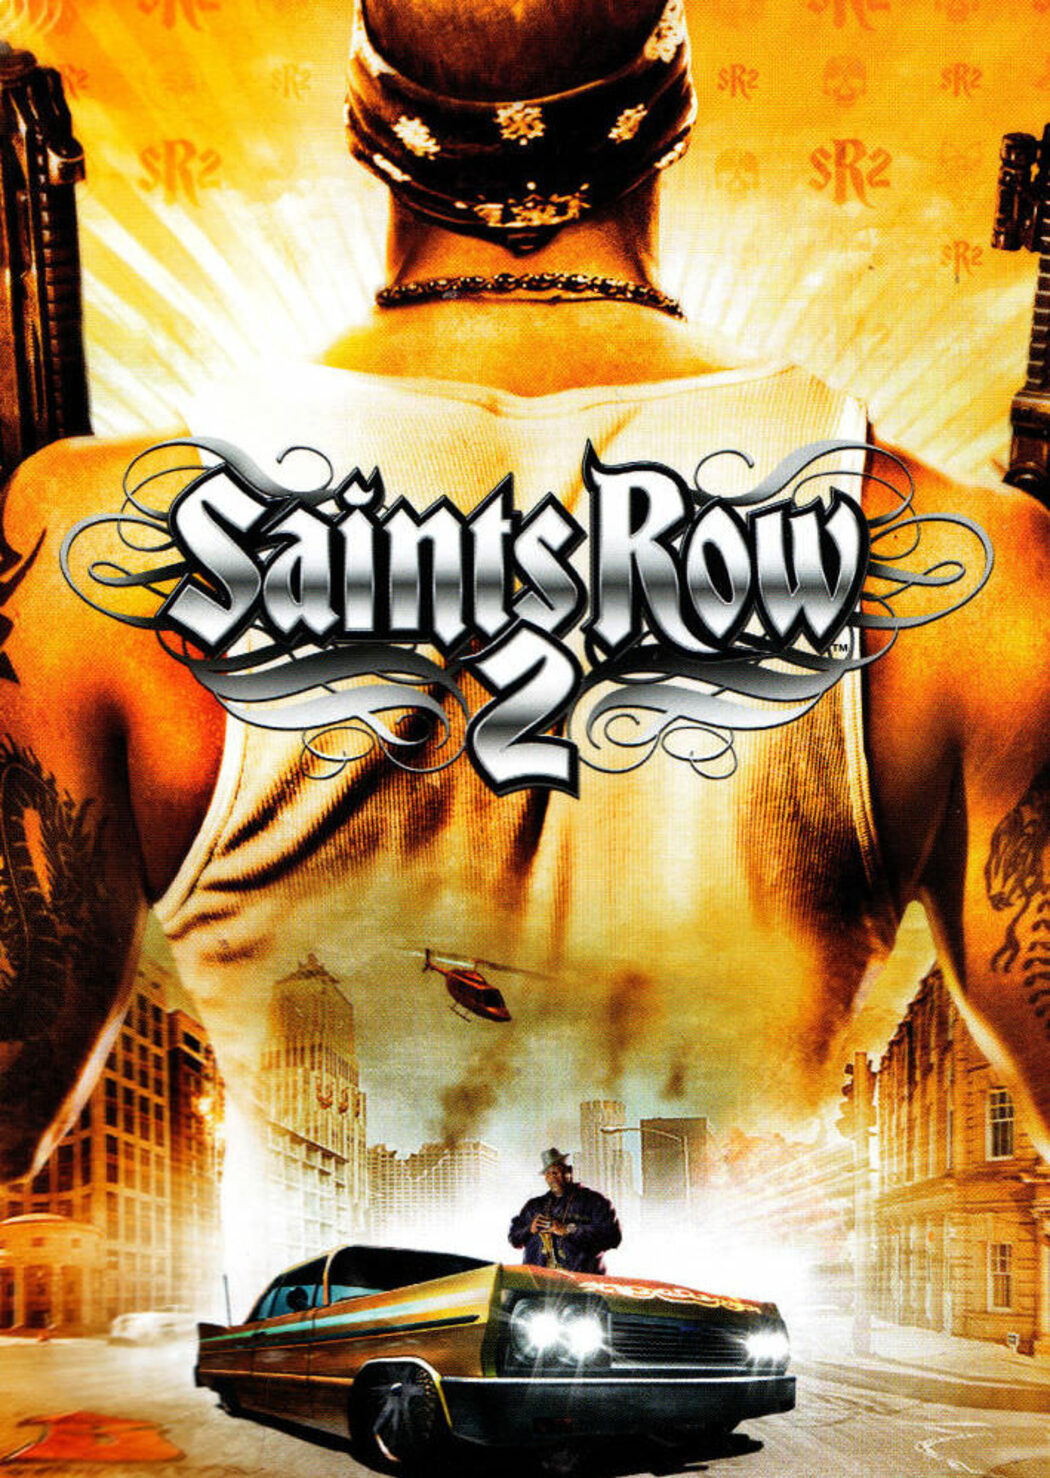 Steam Community :: Saints Row 2